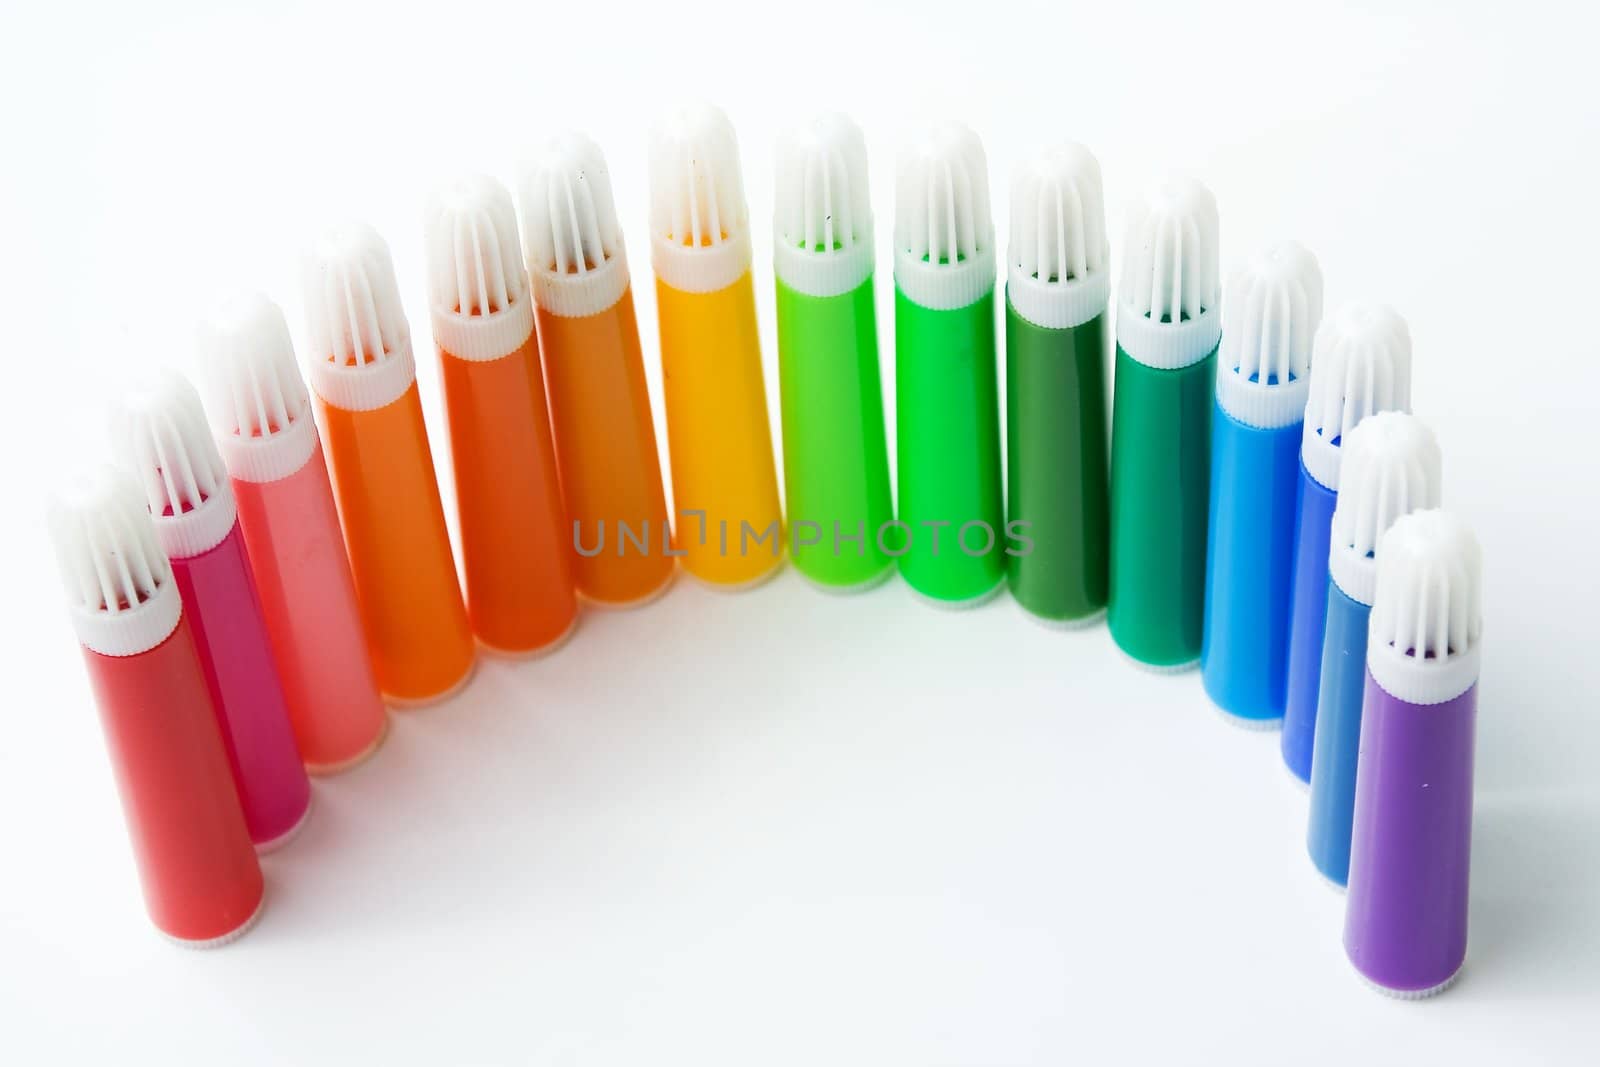 Colored Felt Pens by Vladimir